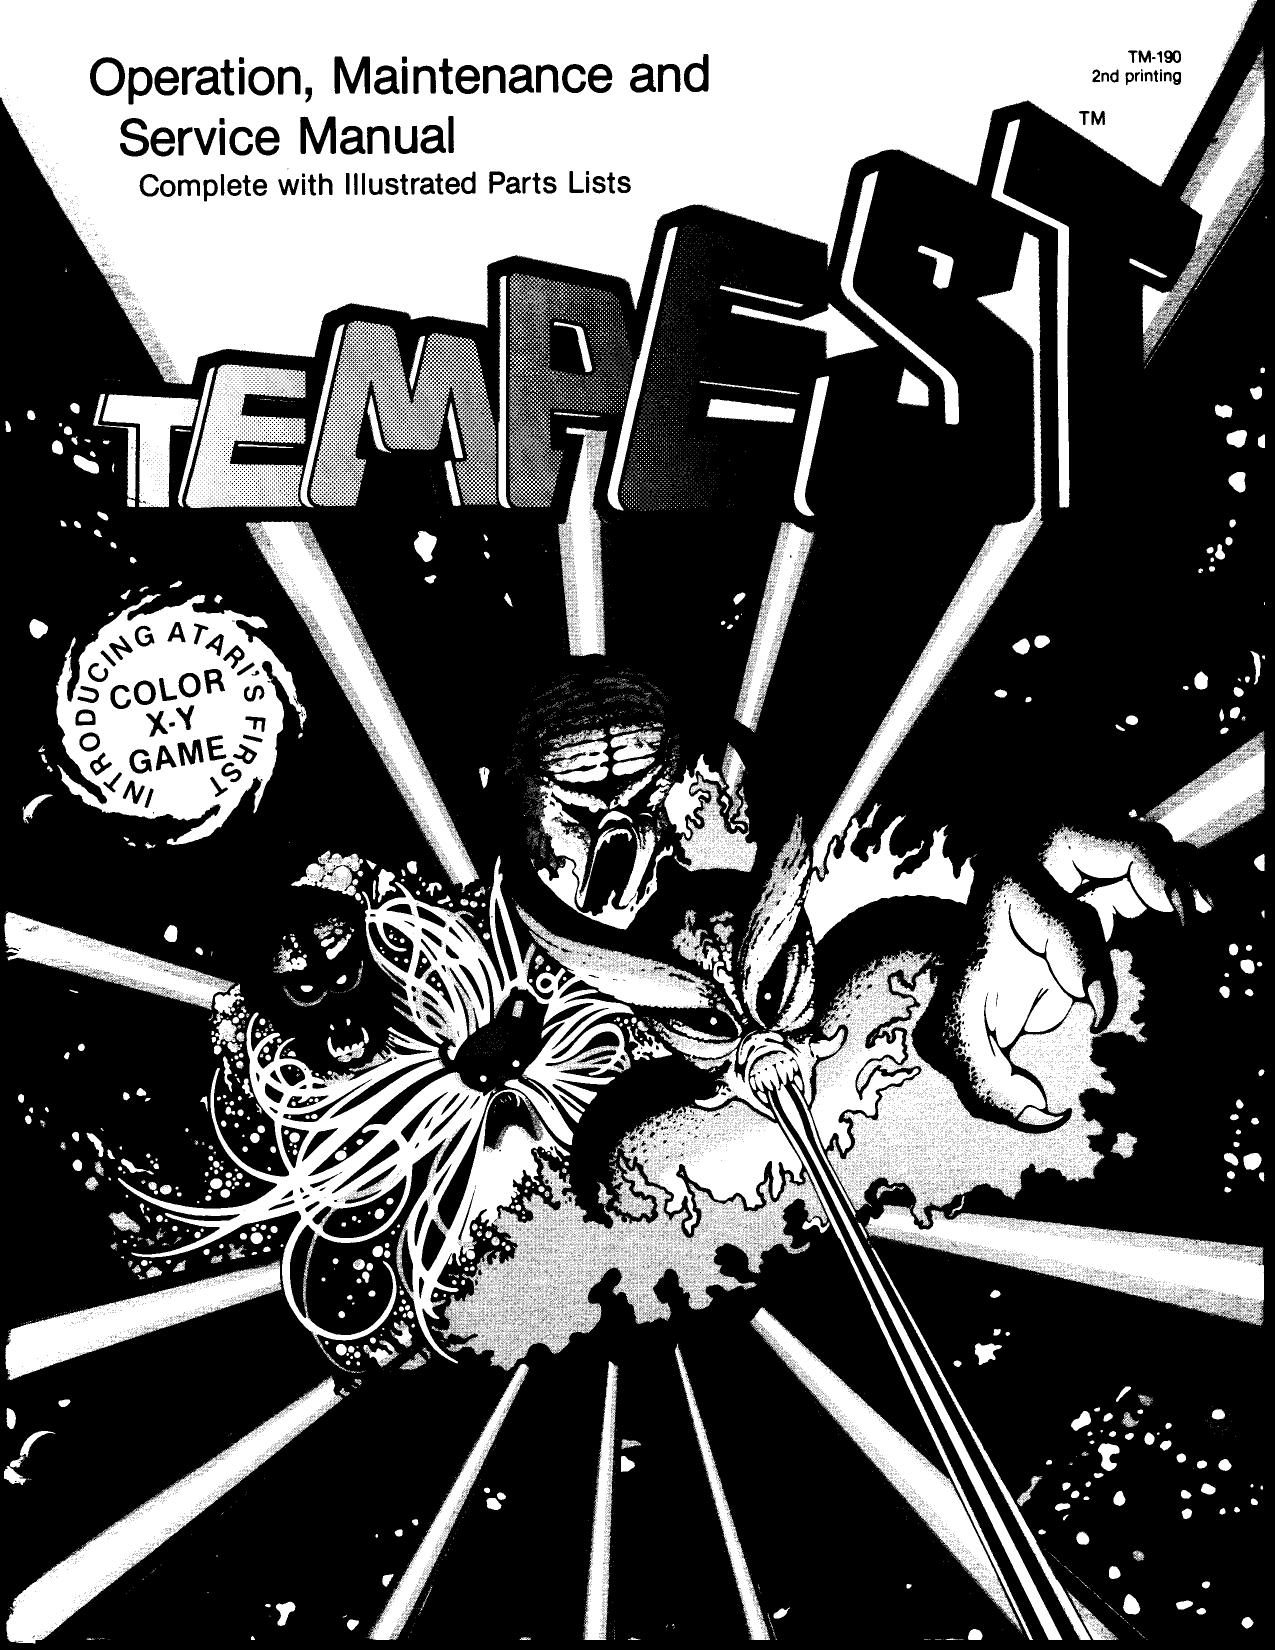 Tempest (TM-190 2nd Printing) (Op-Maint-Serv-Parts) (U)